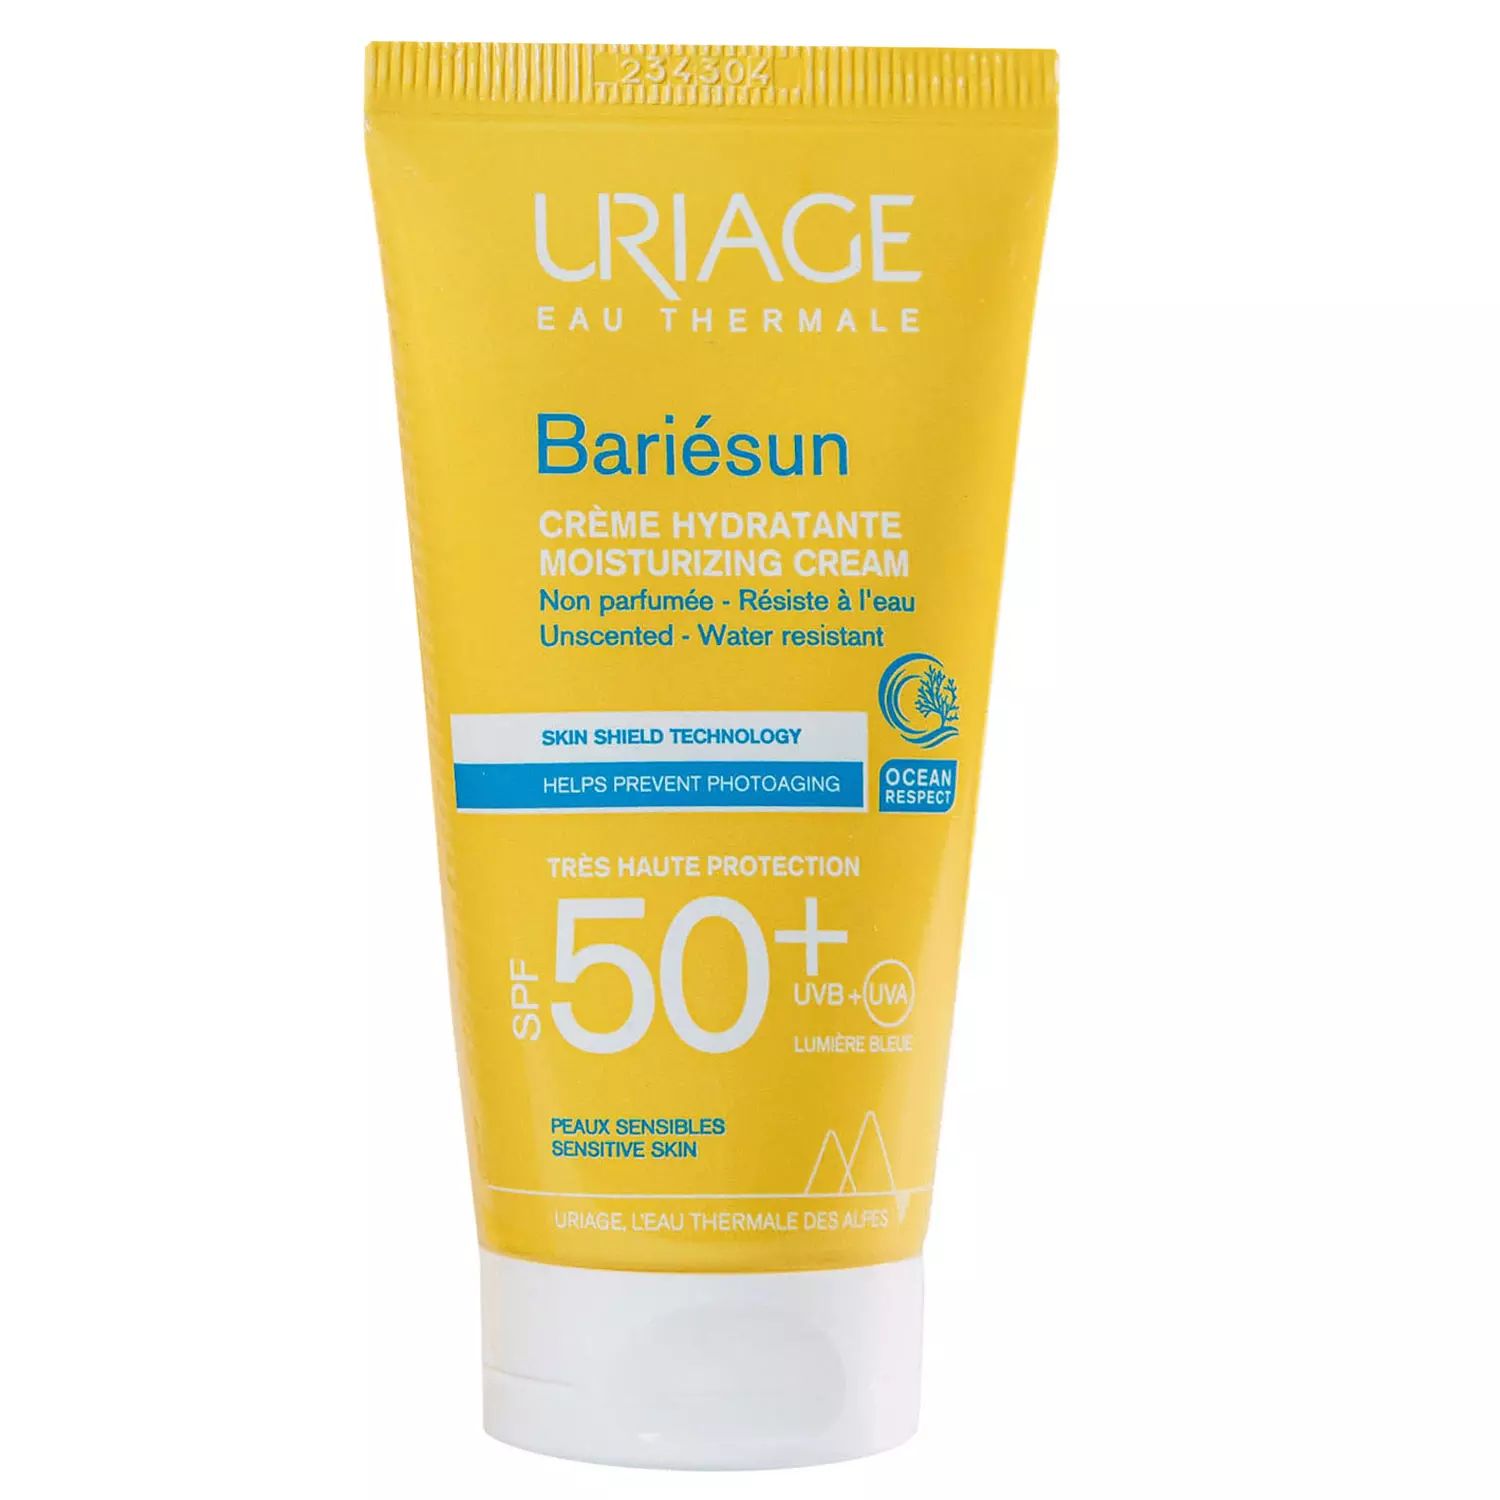 Увлажняющий крем Uriage Bariesun Creme Hydratante без ароматизаторов SPF 50+, 50 мл beafix крем для ног hemp oil beauty therapy с высоким содержанием конопляного масла